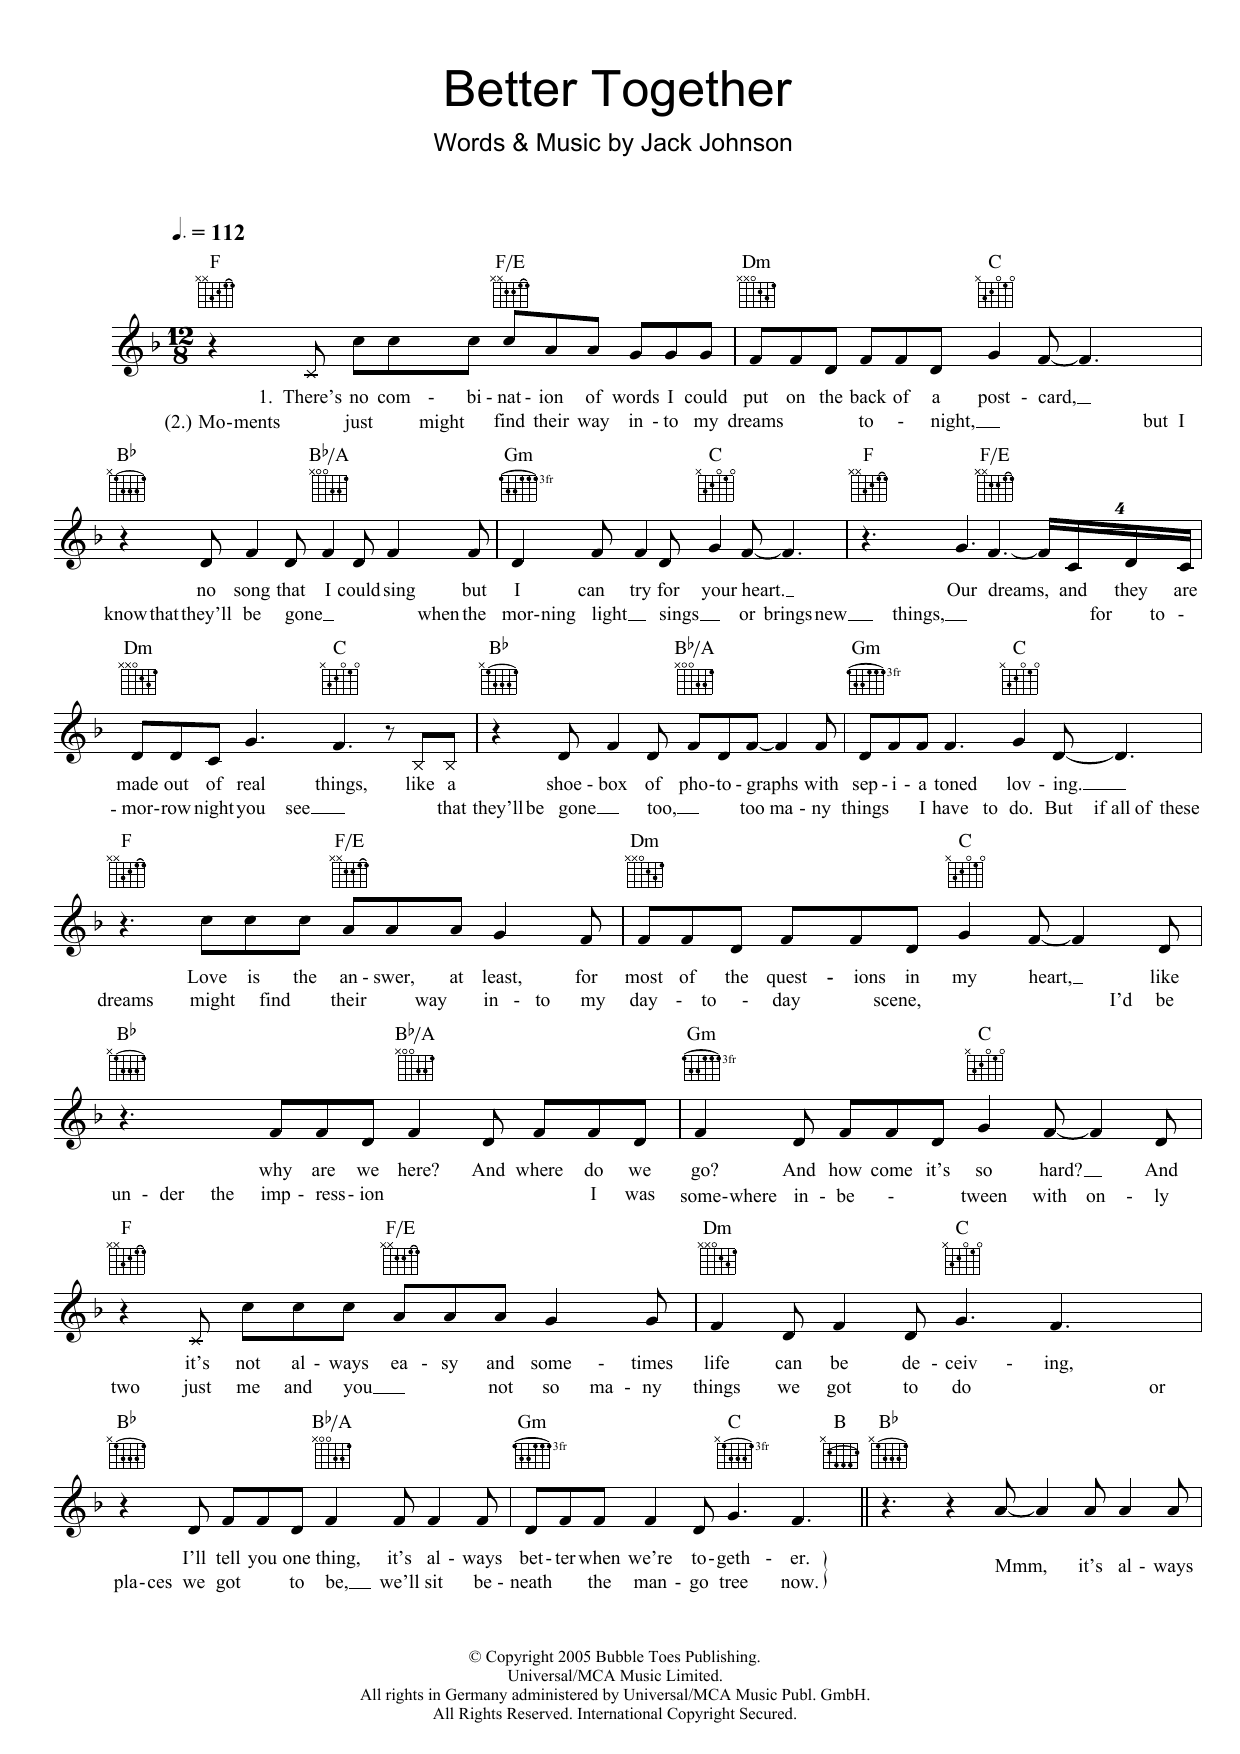 Jack Johnson Better Together Sheet Music Notes & Chords for Ukulele with strumming patterns - Download or Print PDF